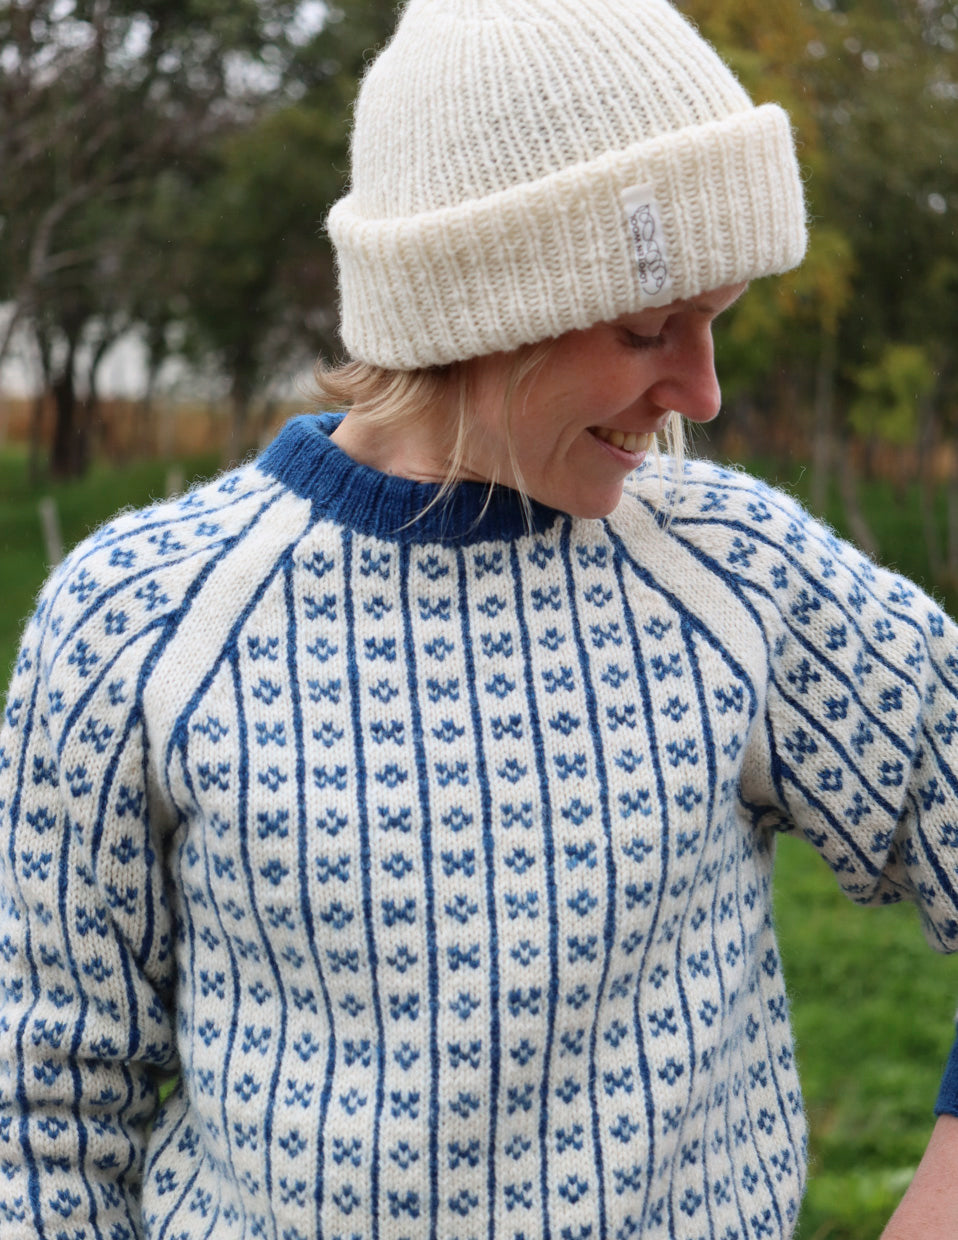 Islender sweater with stripes, knitting kit